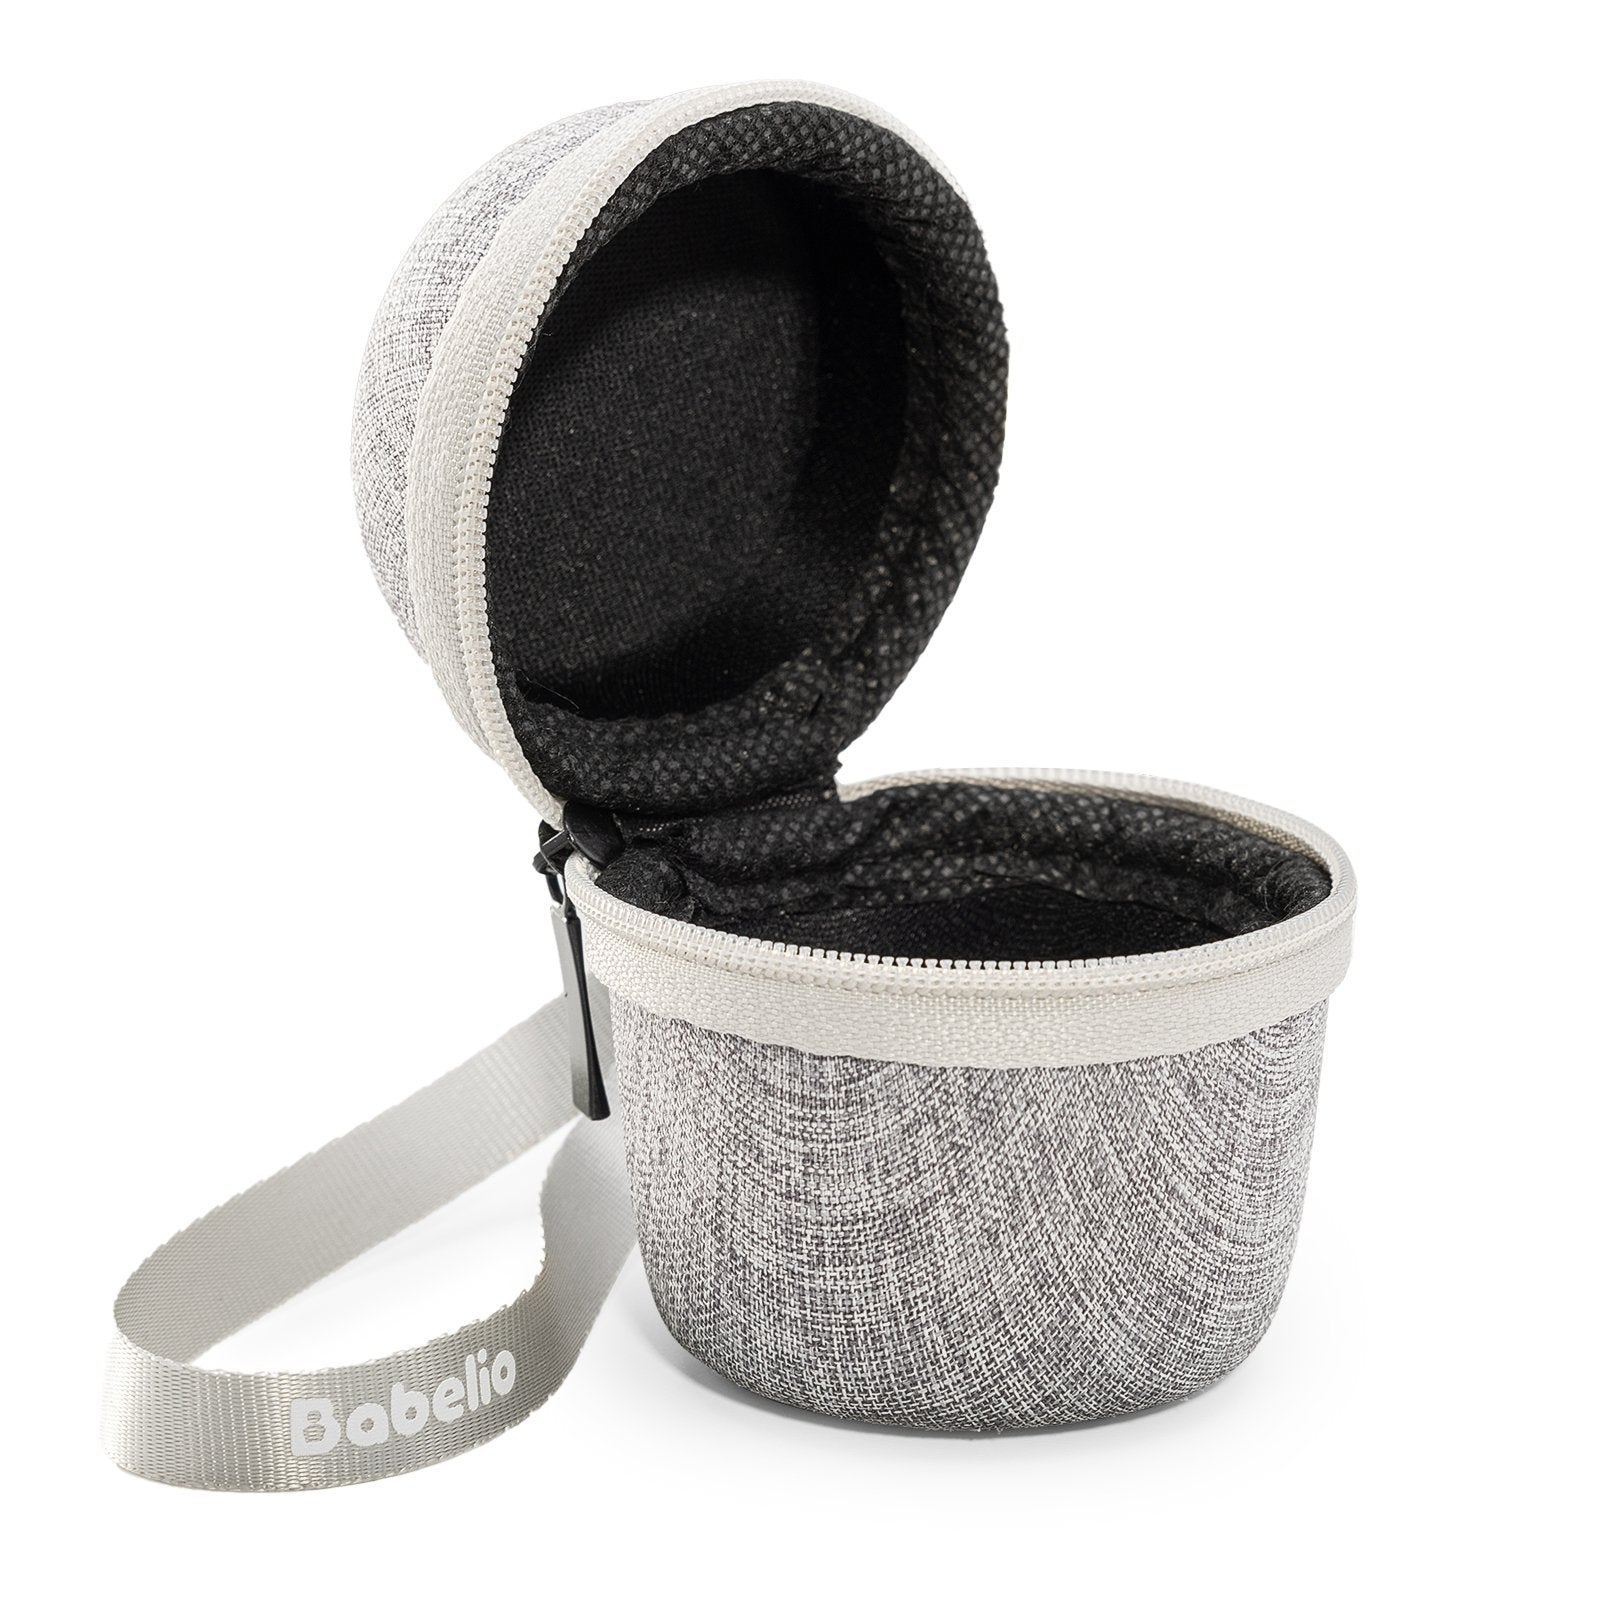 Babelio Portable Travel Case for Babelio Pocket Mini White Noise Machine, Double Stitch Zipper - Perfect for Traveling - babeliobaby